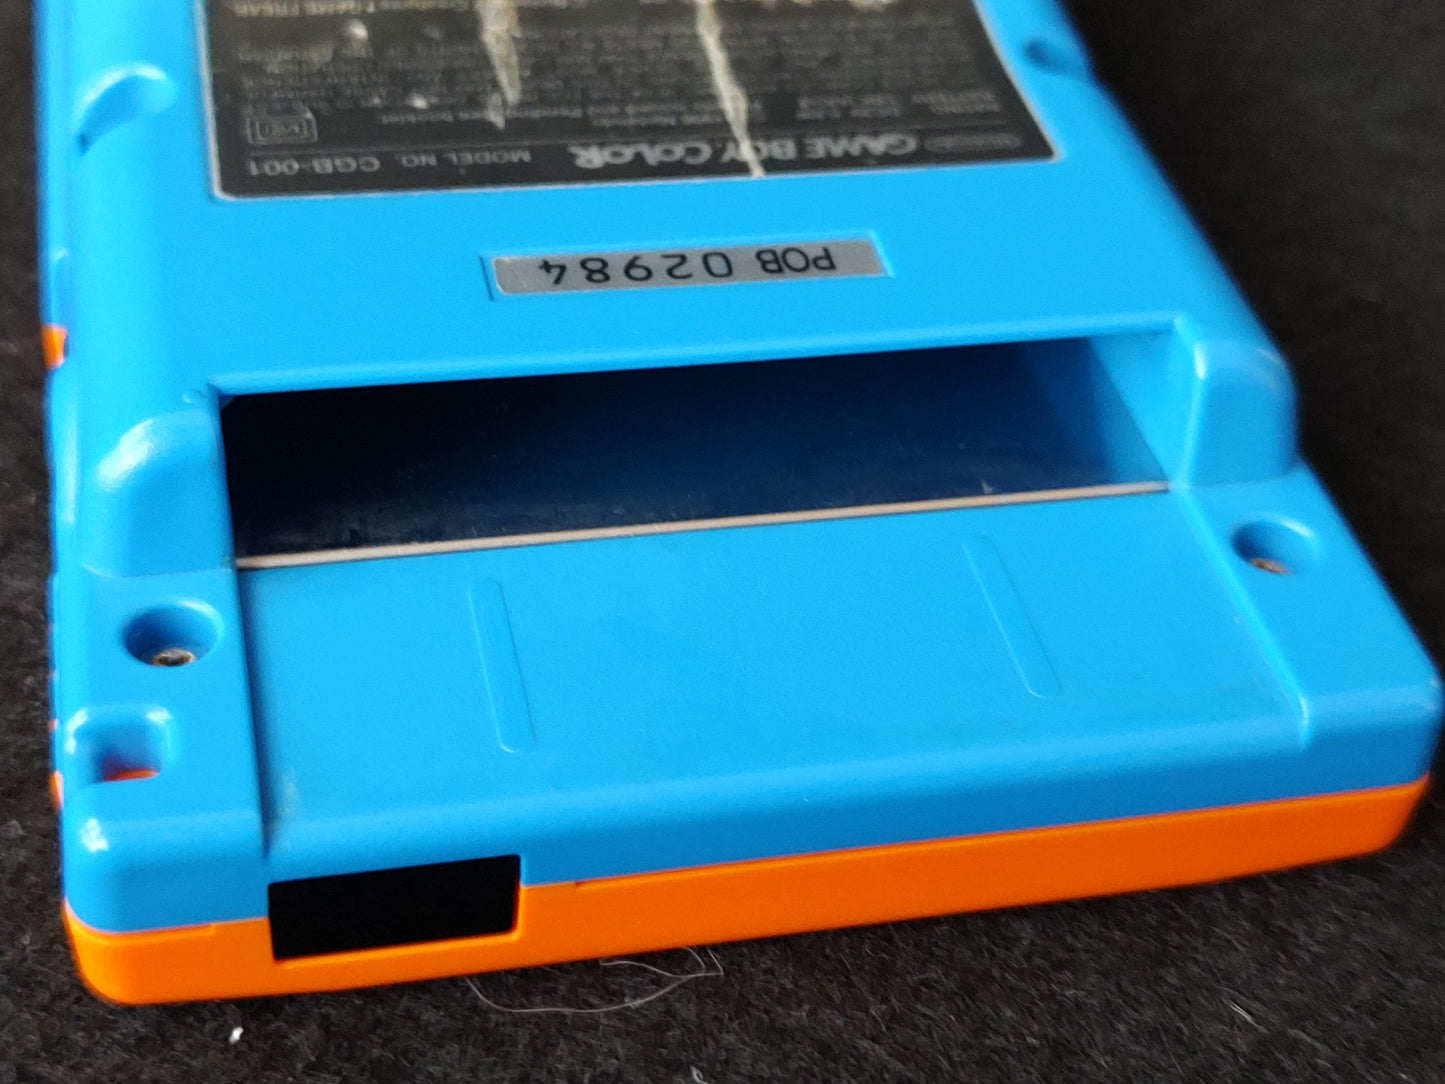 Nintendo Gameboy Color Pokemon Limited edition Orange color console set -f0906-